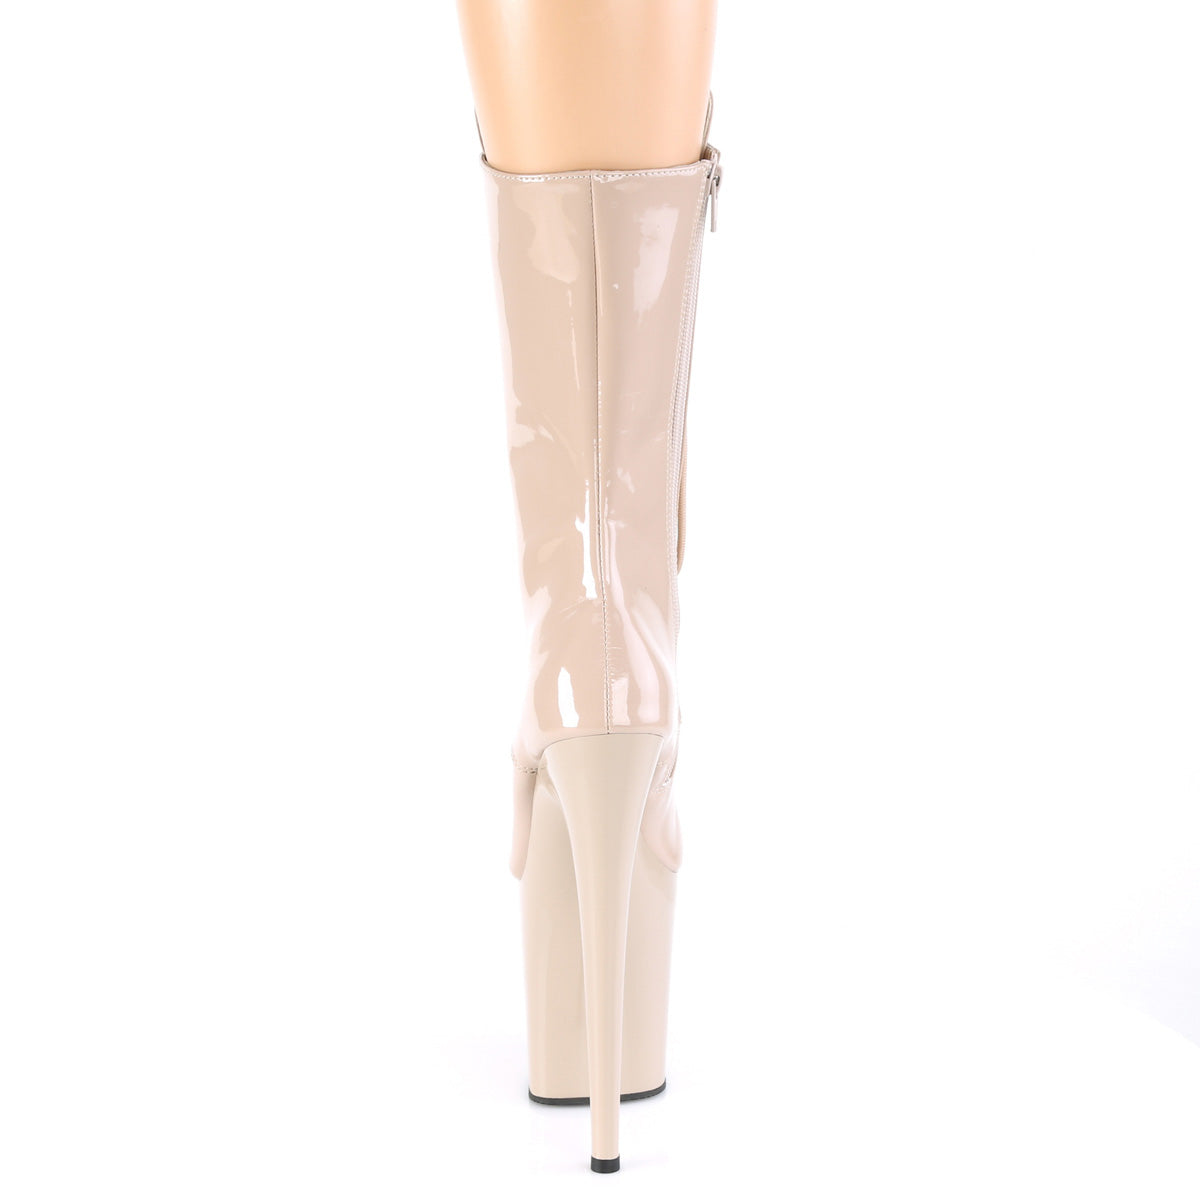 FLAMINGO-1050 8 Inch Heel Nude Patent Pole Dancing -Pleaser- Sexy Shoes Fetish Footwear